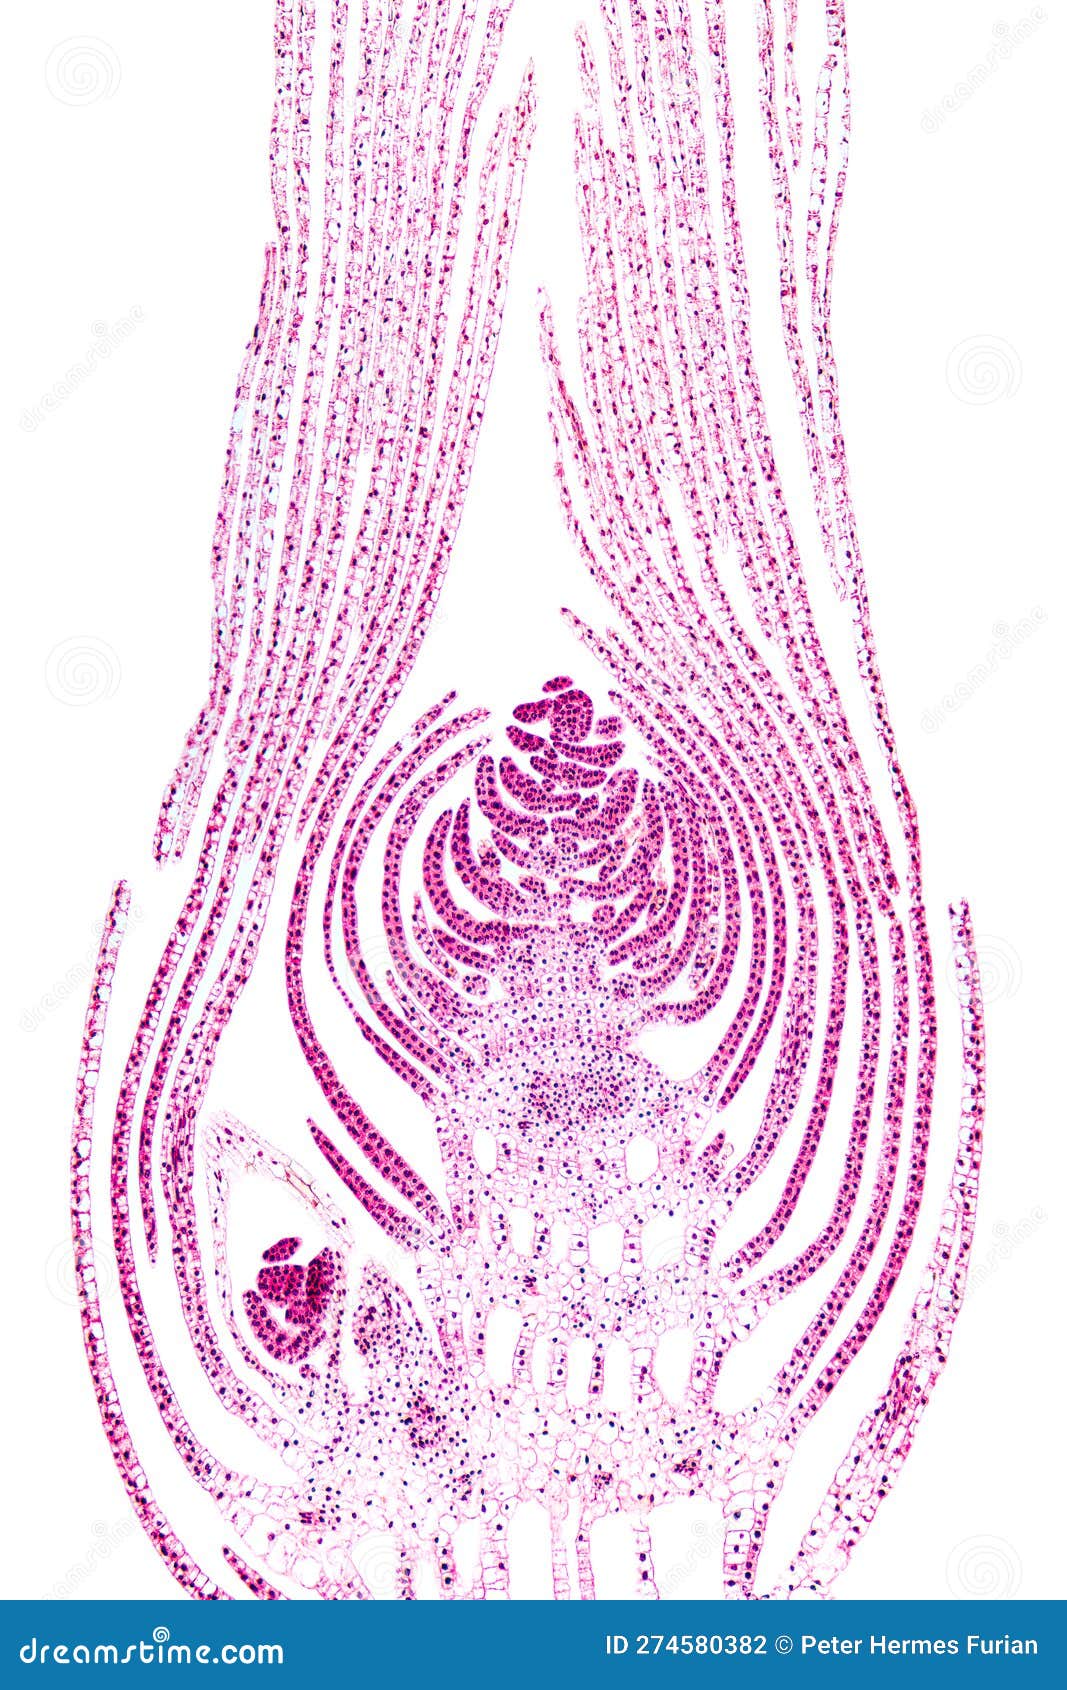 apical bud of an aquatic plant, longitudinal section, 20x light micrograph